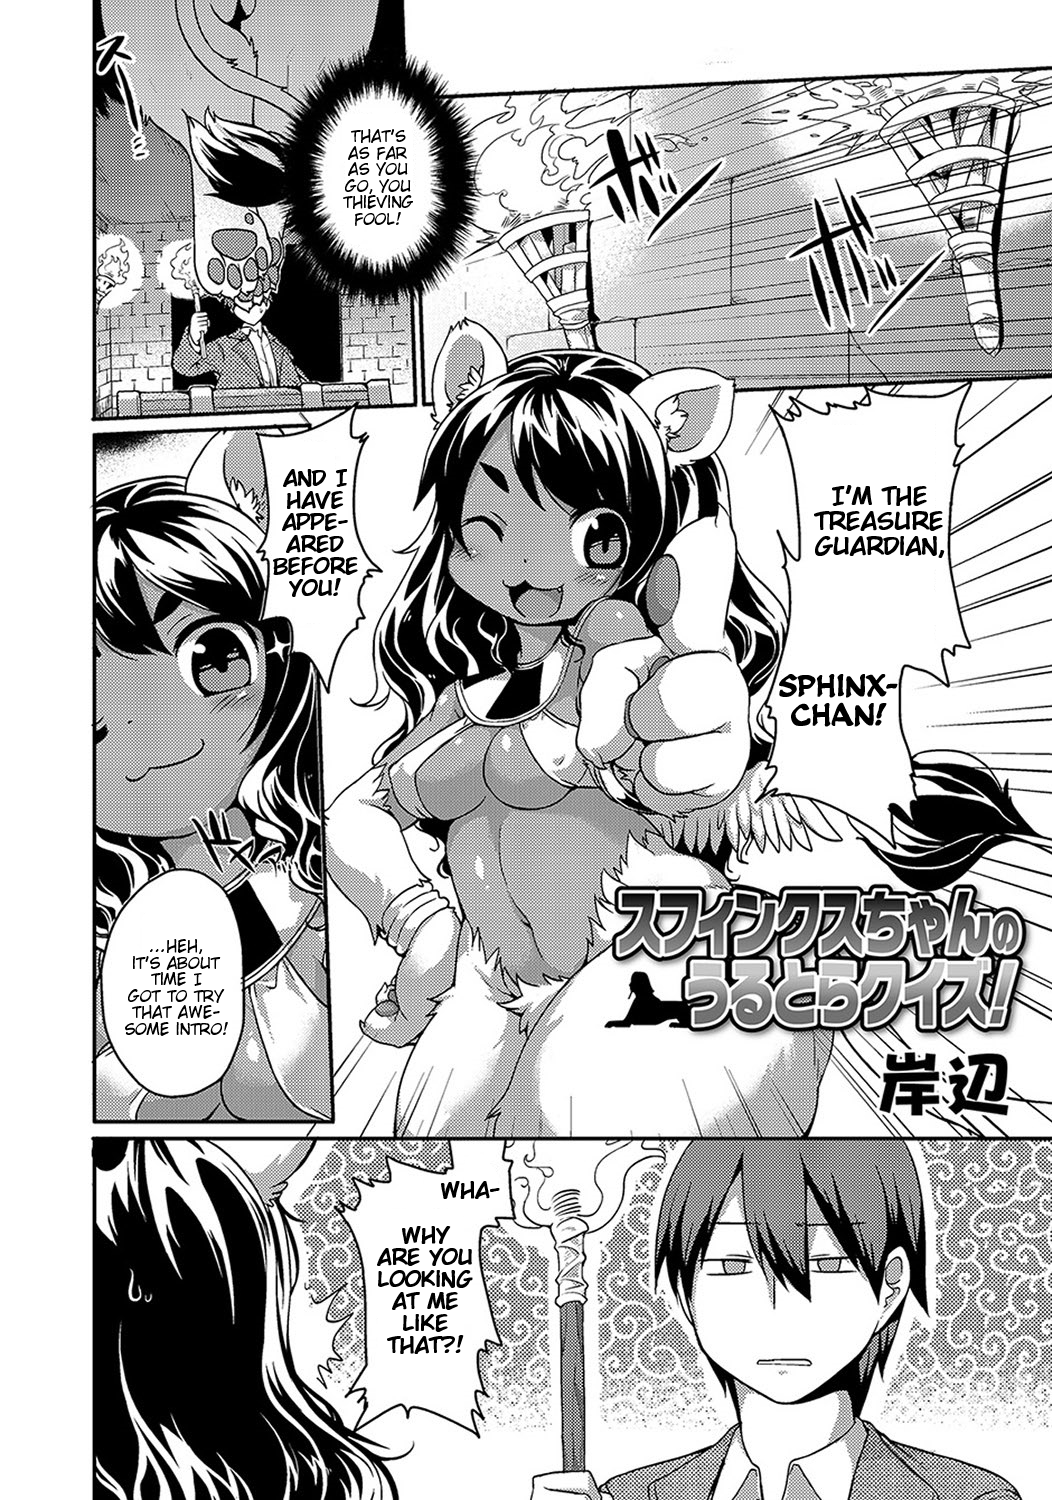 Anime Sphinx Porn - Kishibe] Sphinx-chan's Ultra Quiz - [Kishibe] Sphinx-chan's Ultra Quiz  [English] {Ver. 2} - Free Hentai Manga, Adult Webtoon, Doujinshi Manga and  Mature Comics